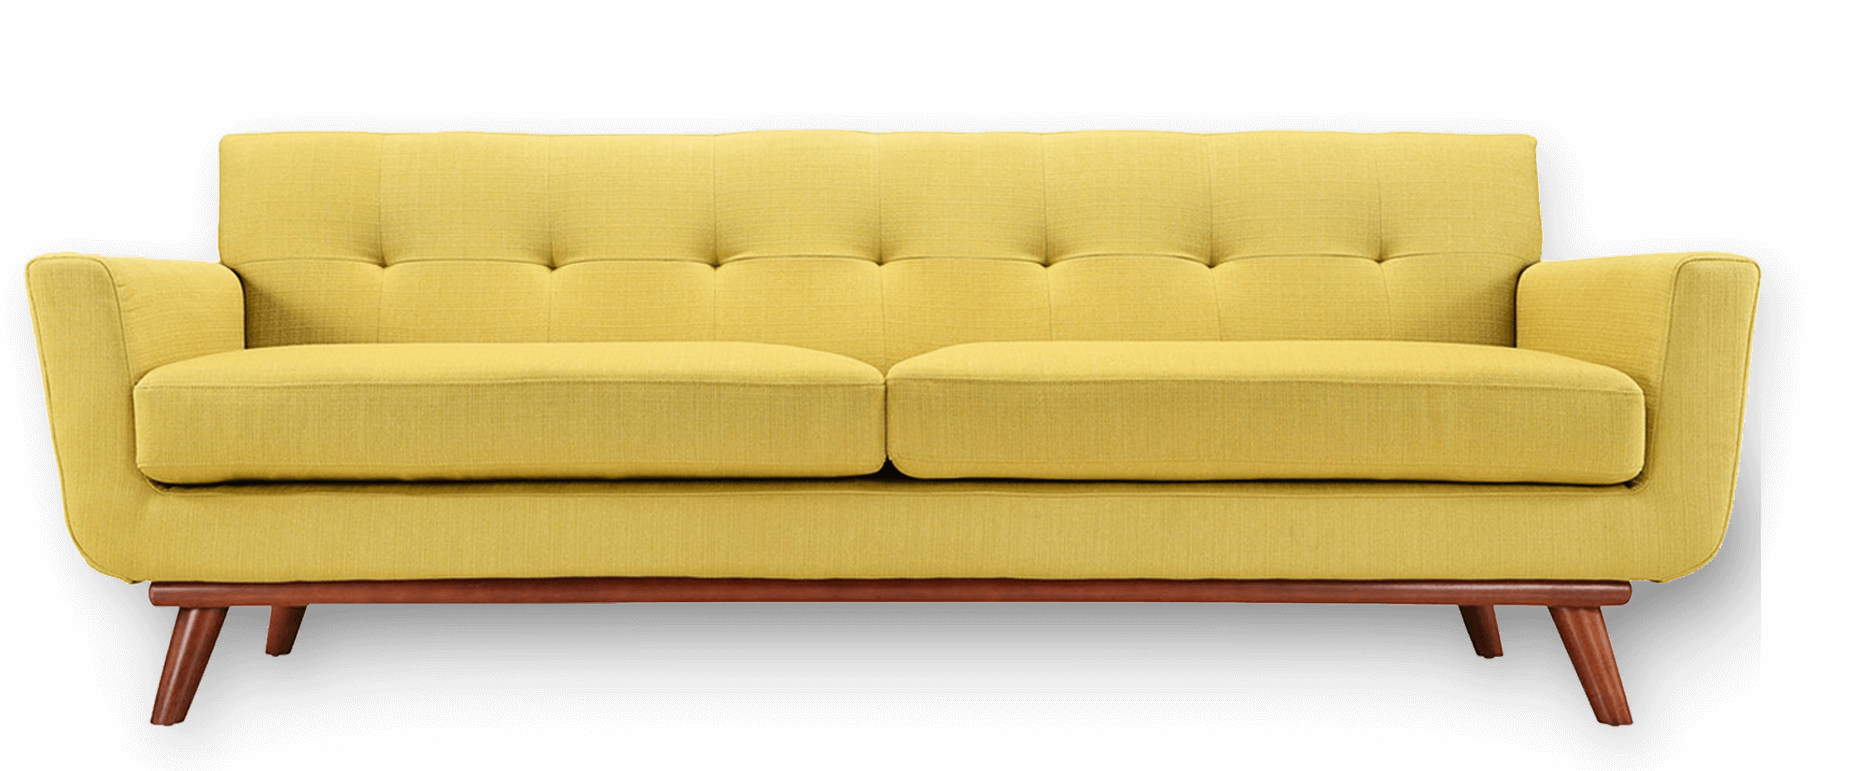 46035 6 Yellow Sofa Free Transparent Image Hd 